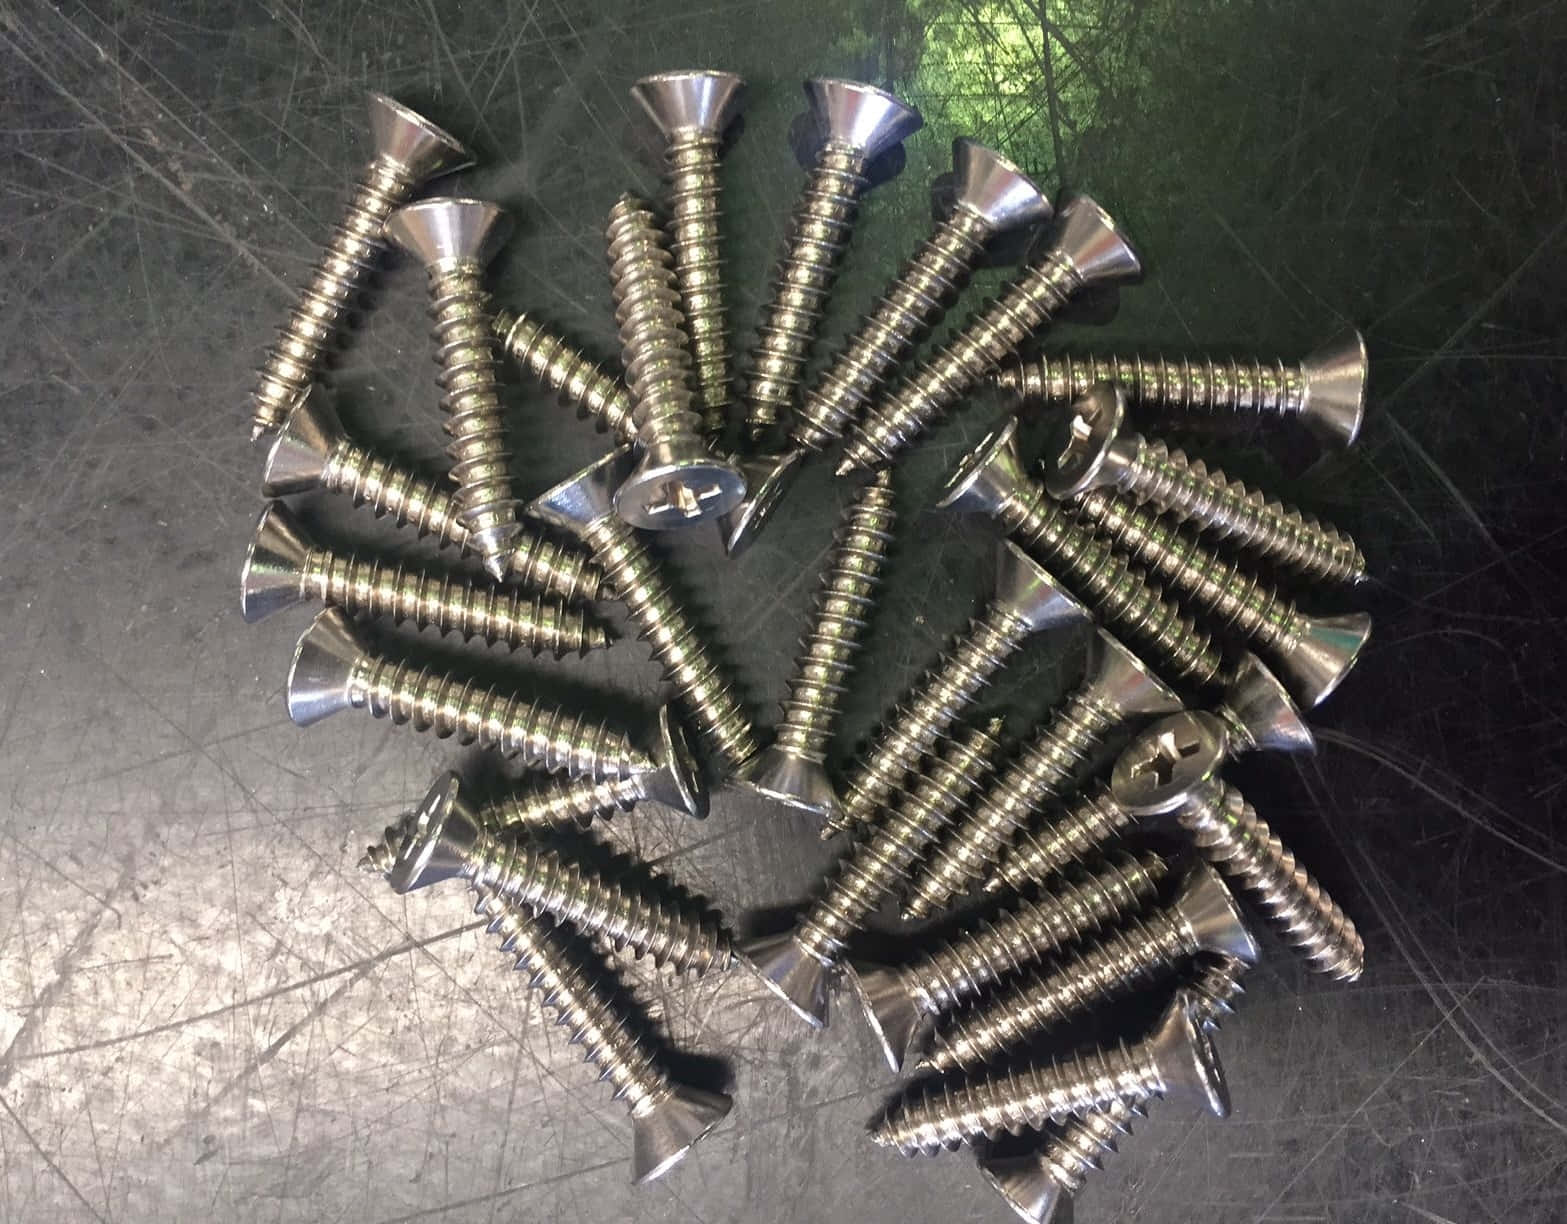 Close-up view of steel screws